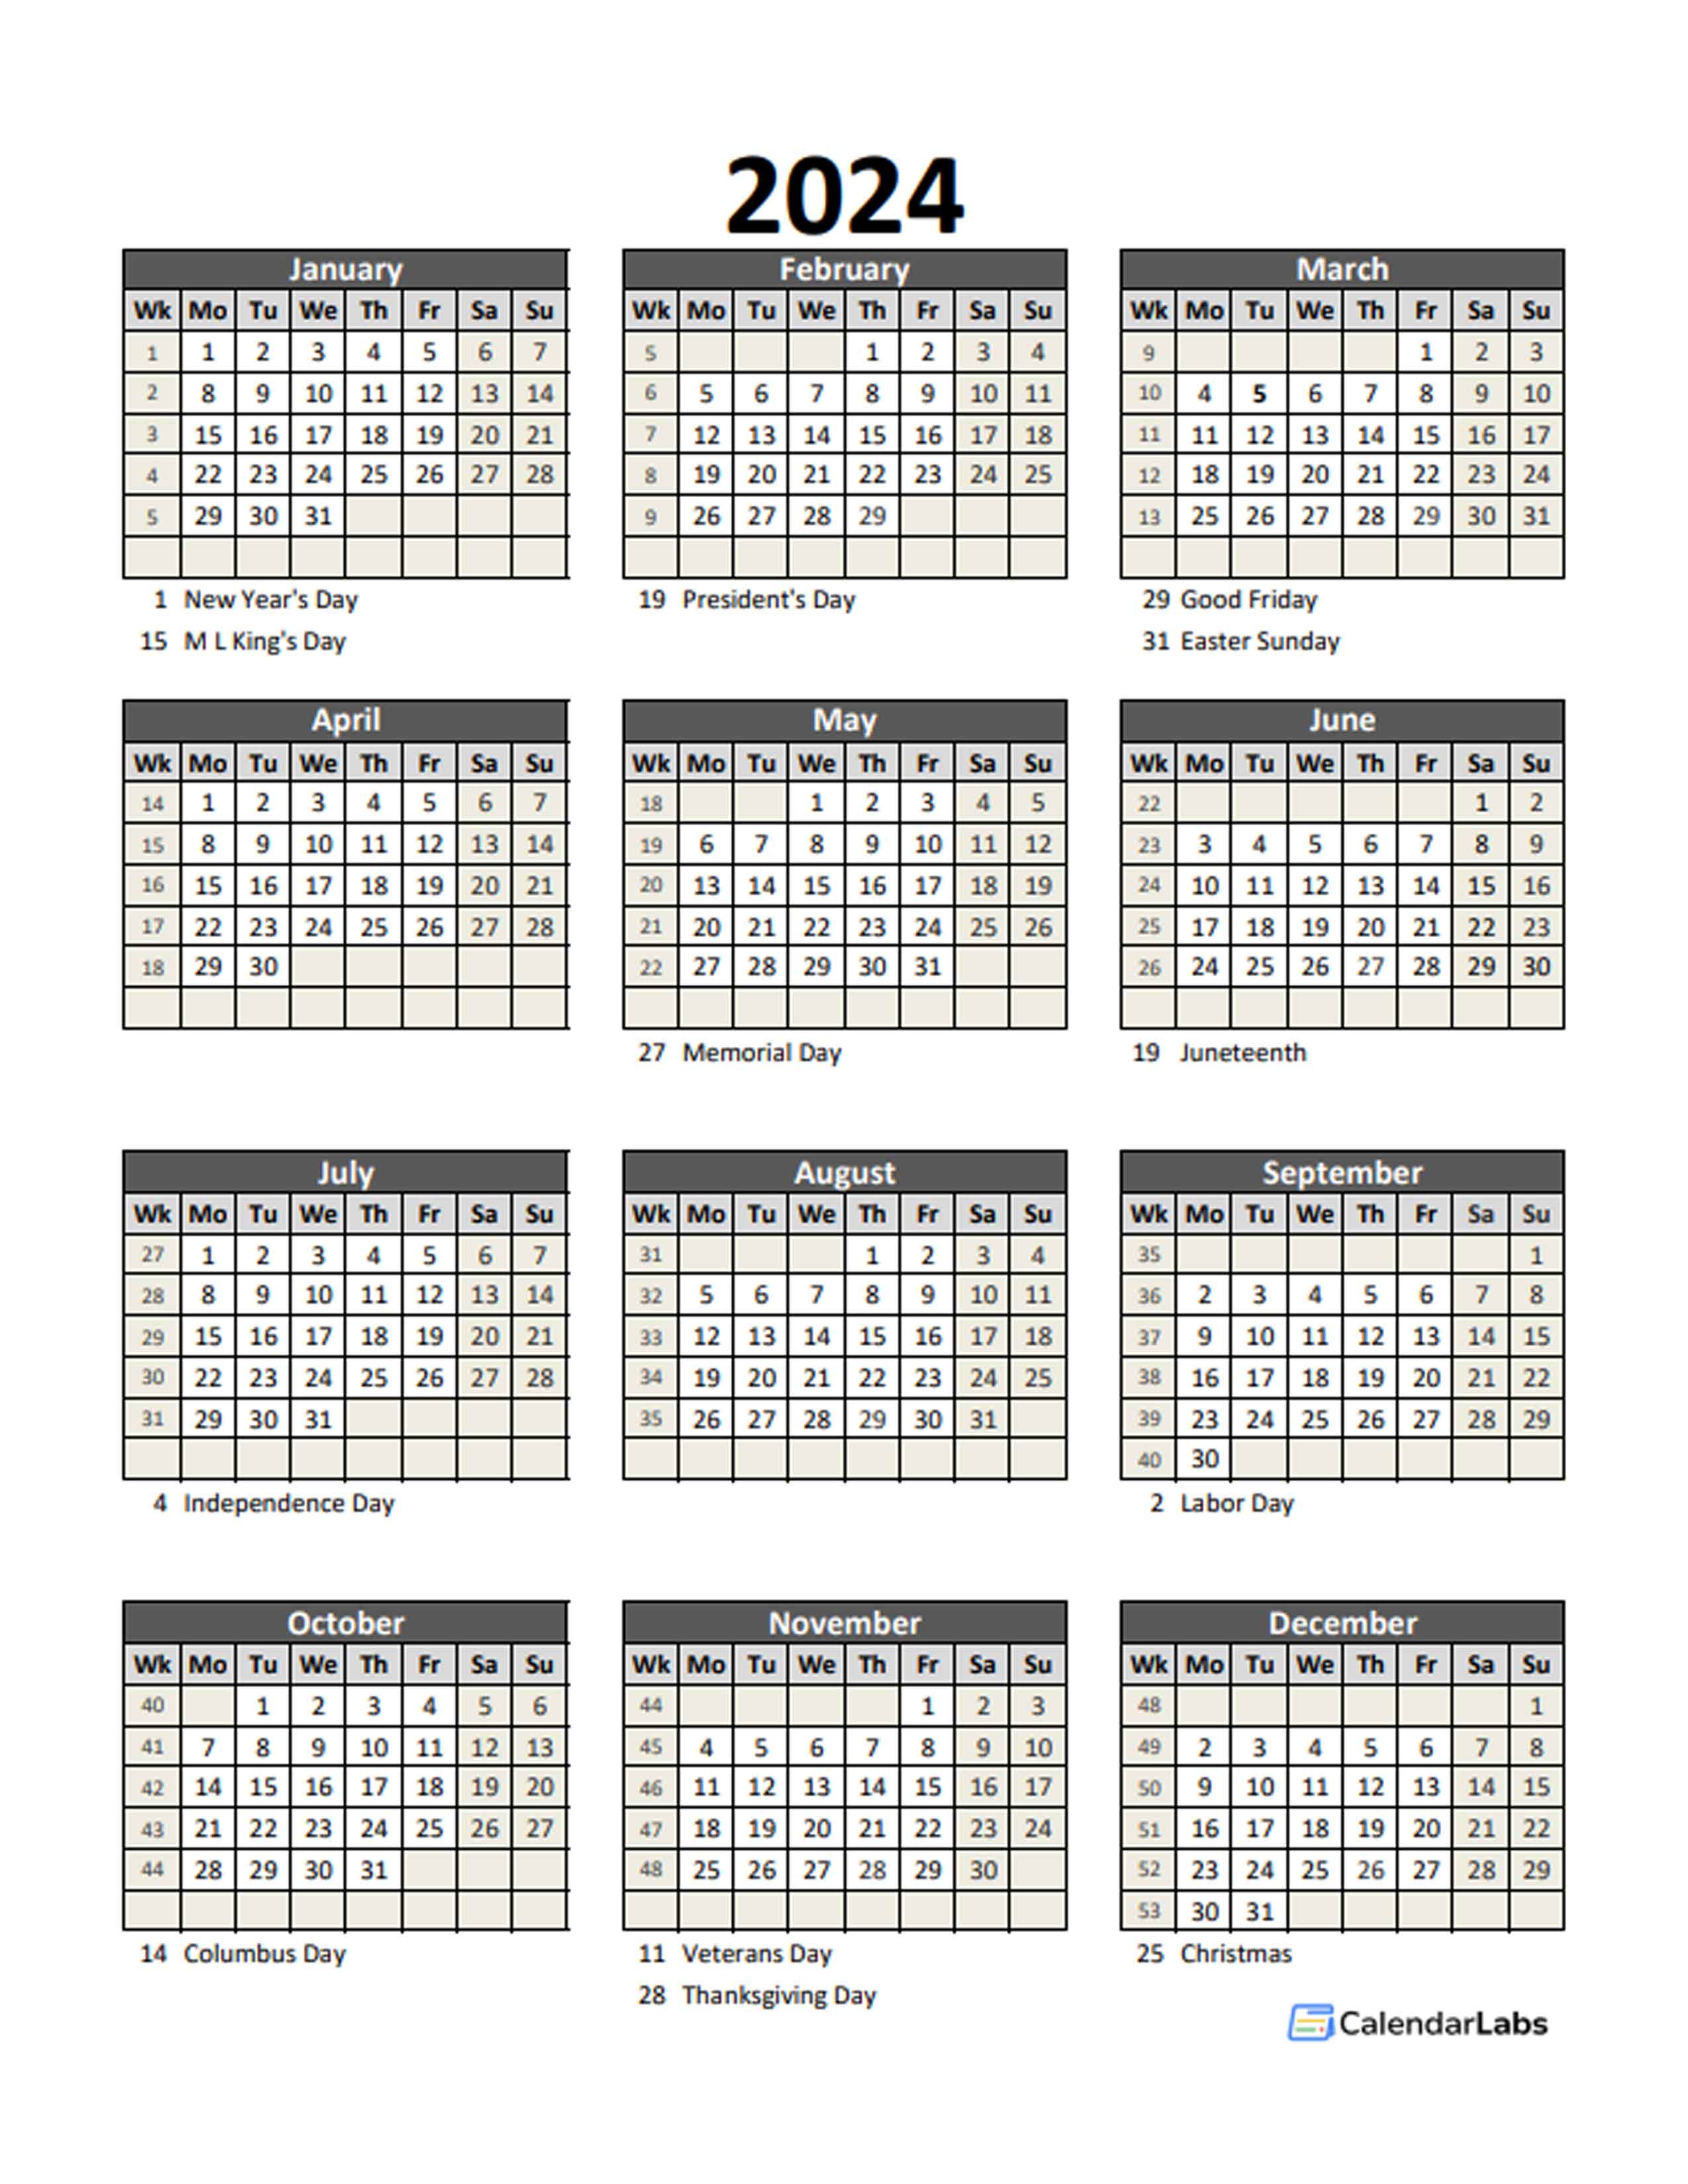 Adp 2024 Payroll Calendar Ora Lavena